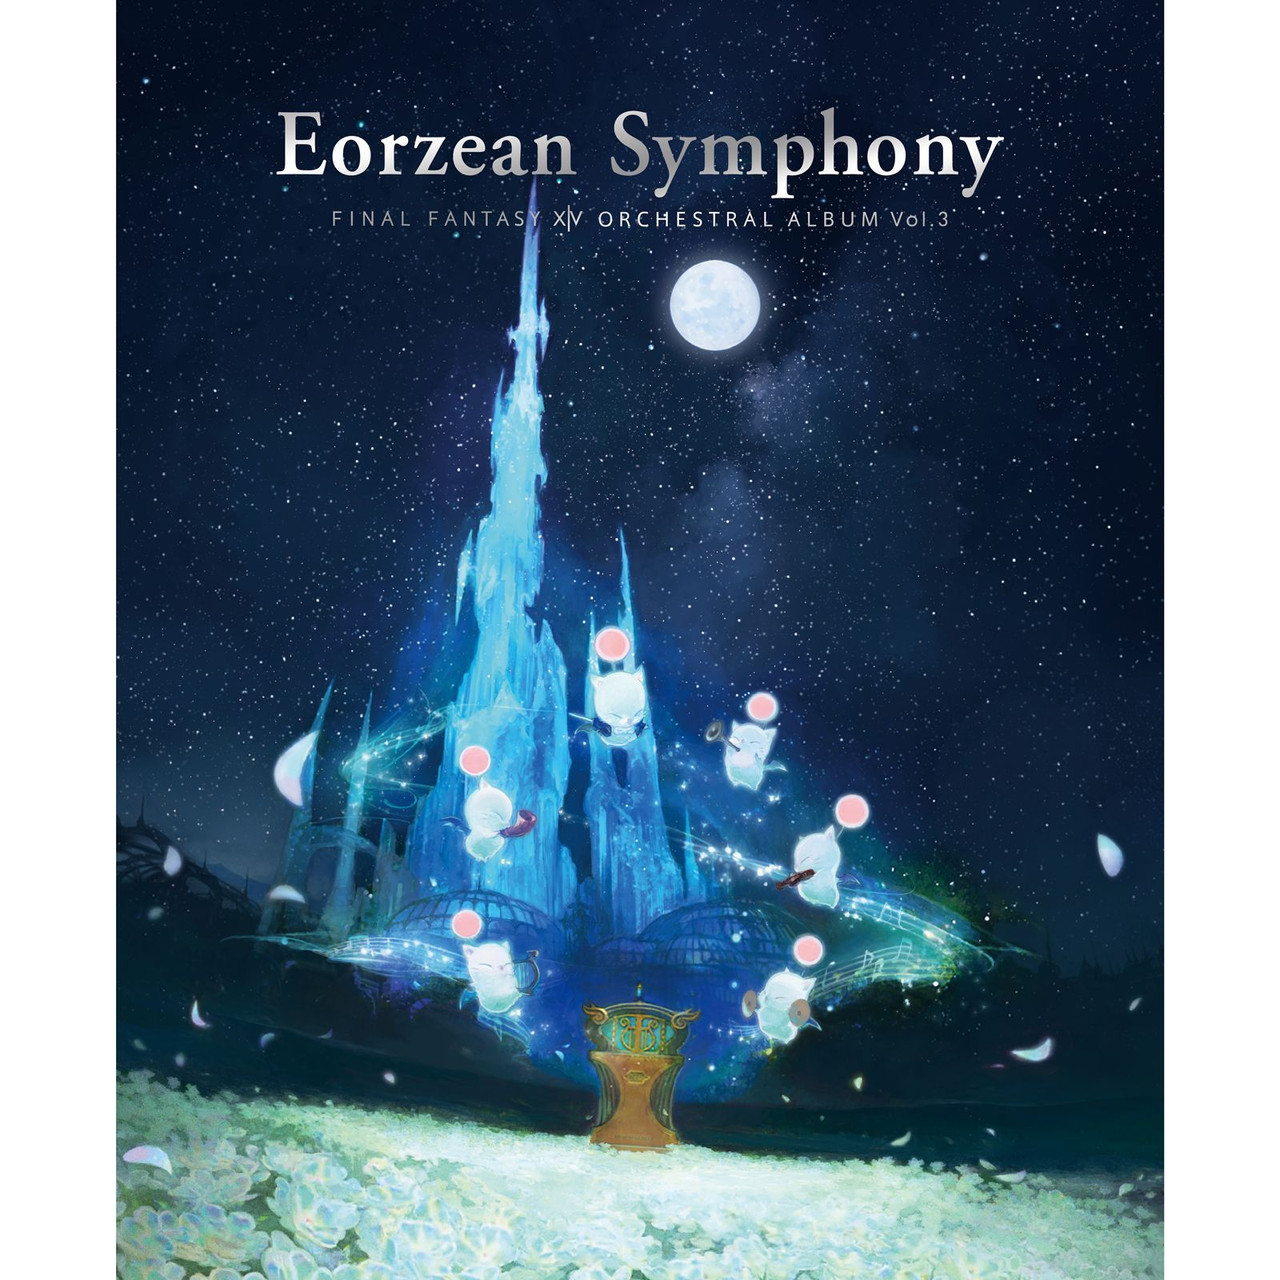 EORZEAN SYMPHONY: FINAL FANTASY XIV ORCHESTRAL ALBUM VOL. 3 [BLU 